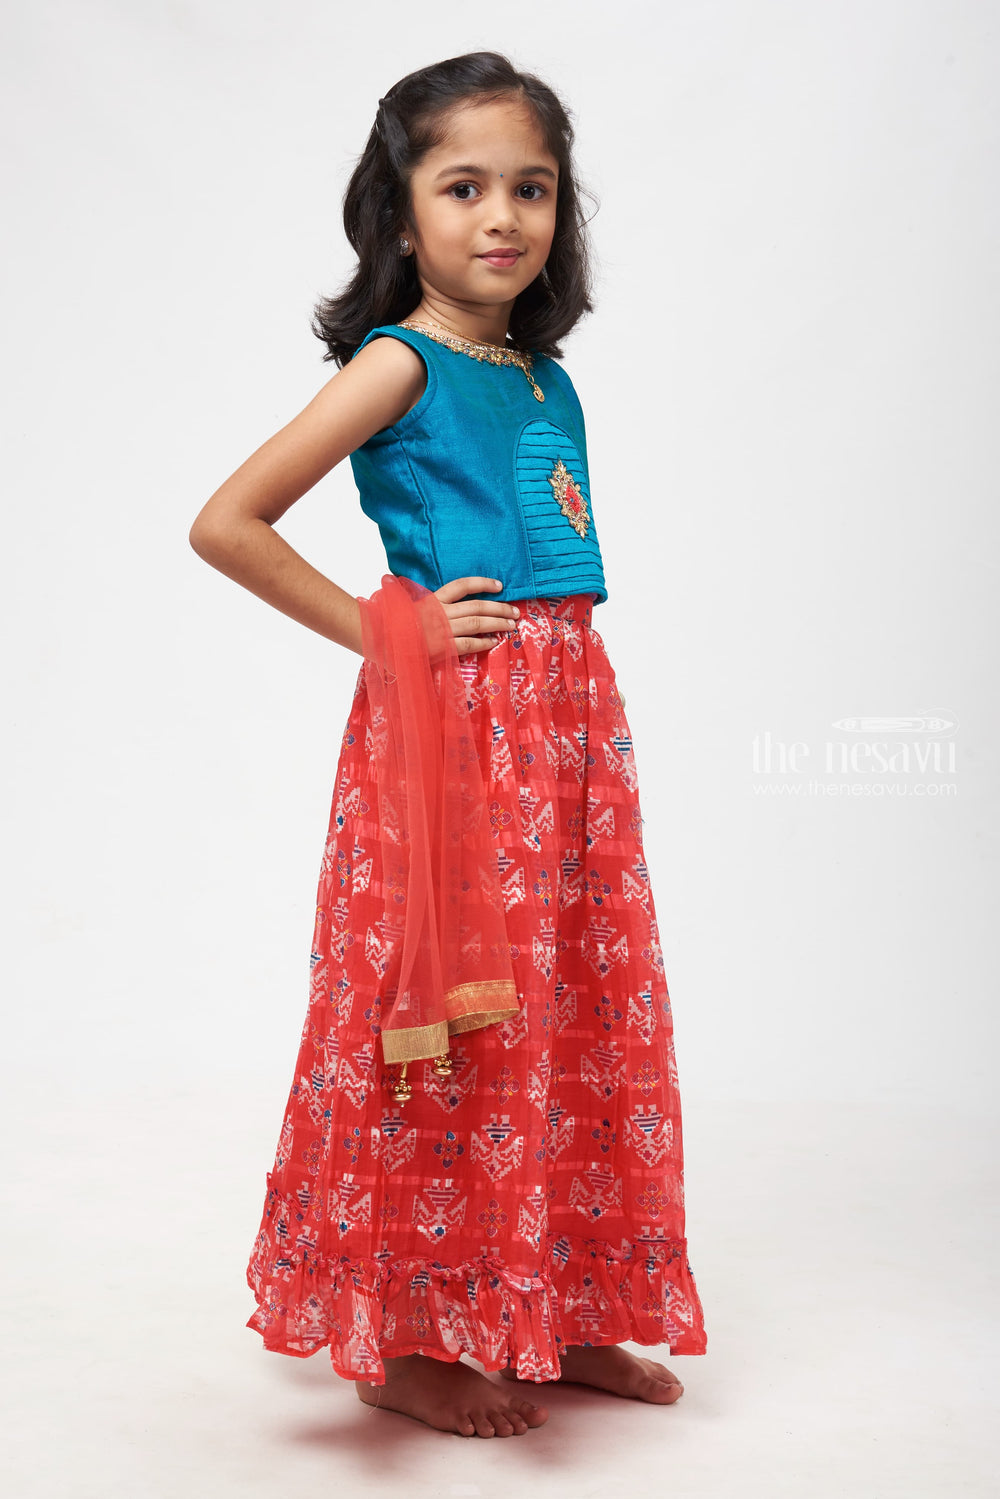 The Nesavu Girls Lehenga Choli Teal Embellished Crop Top & Traditional Pink Printed Lehenga Set Nesavu Kids Festive Lehenga Outfit | Little Girls Lehenga Suit for Diwali | The Nesavu